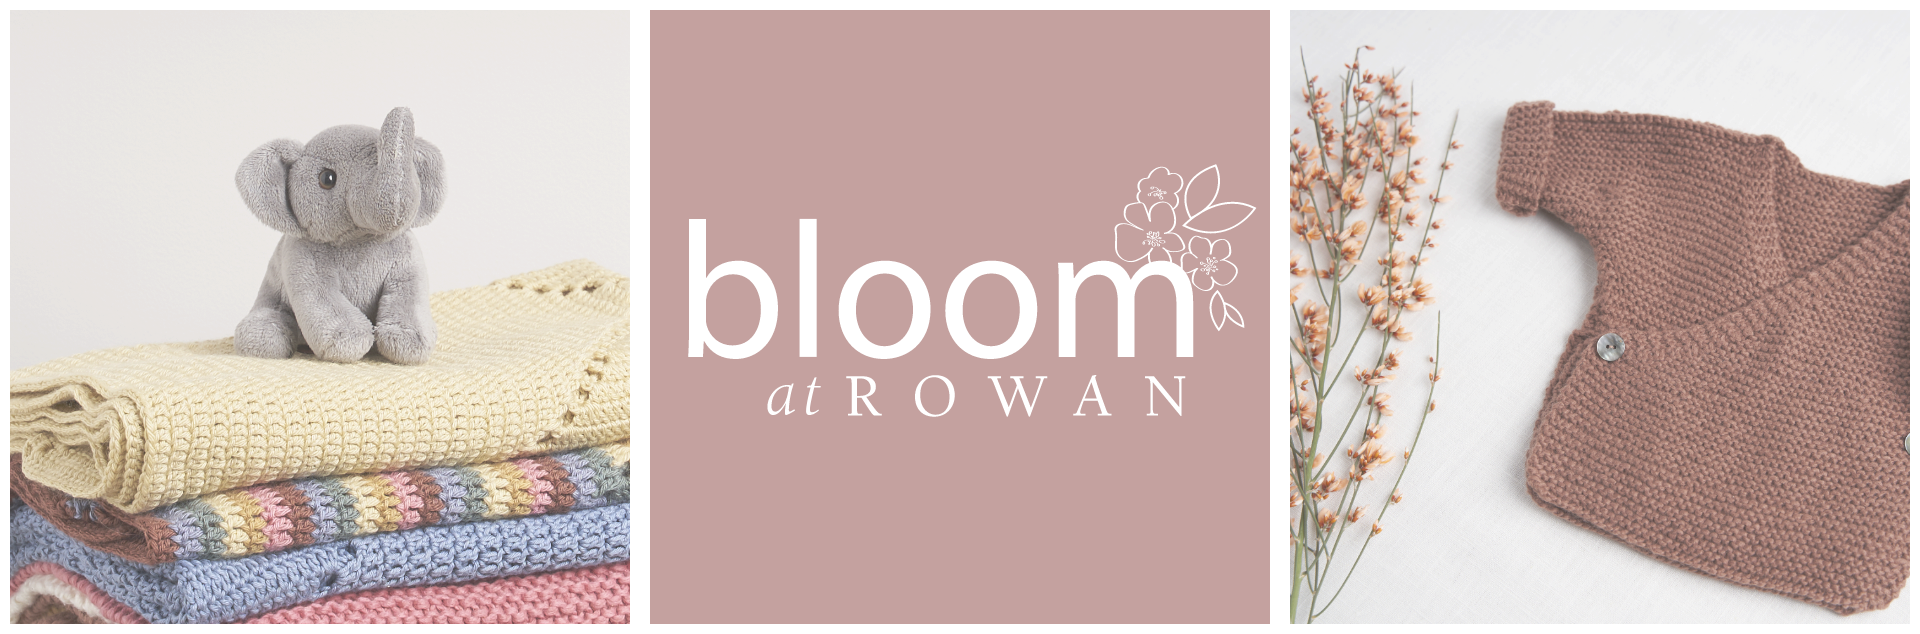 bloom at rowan campaign banner